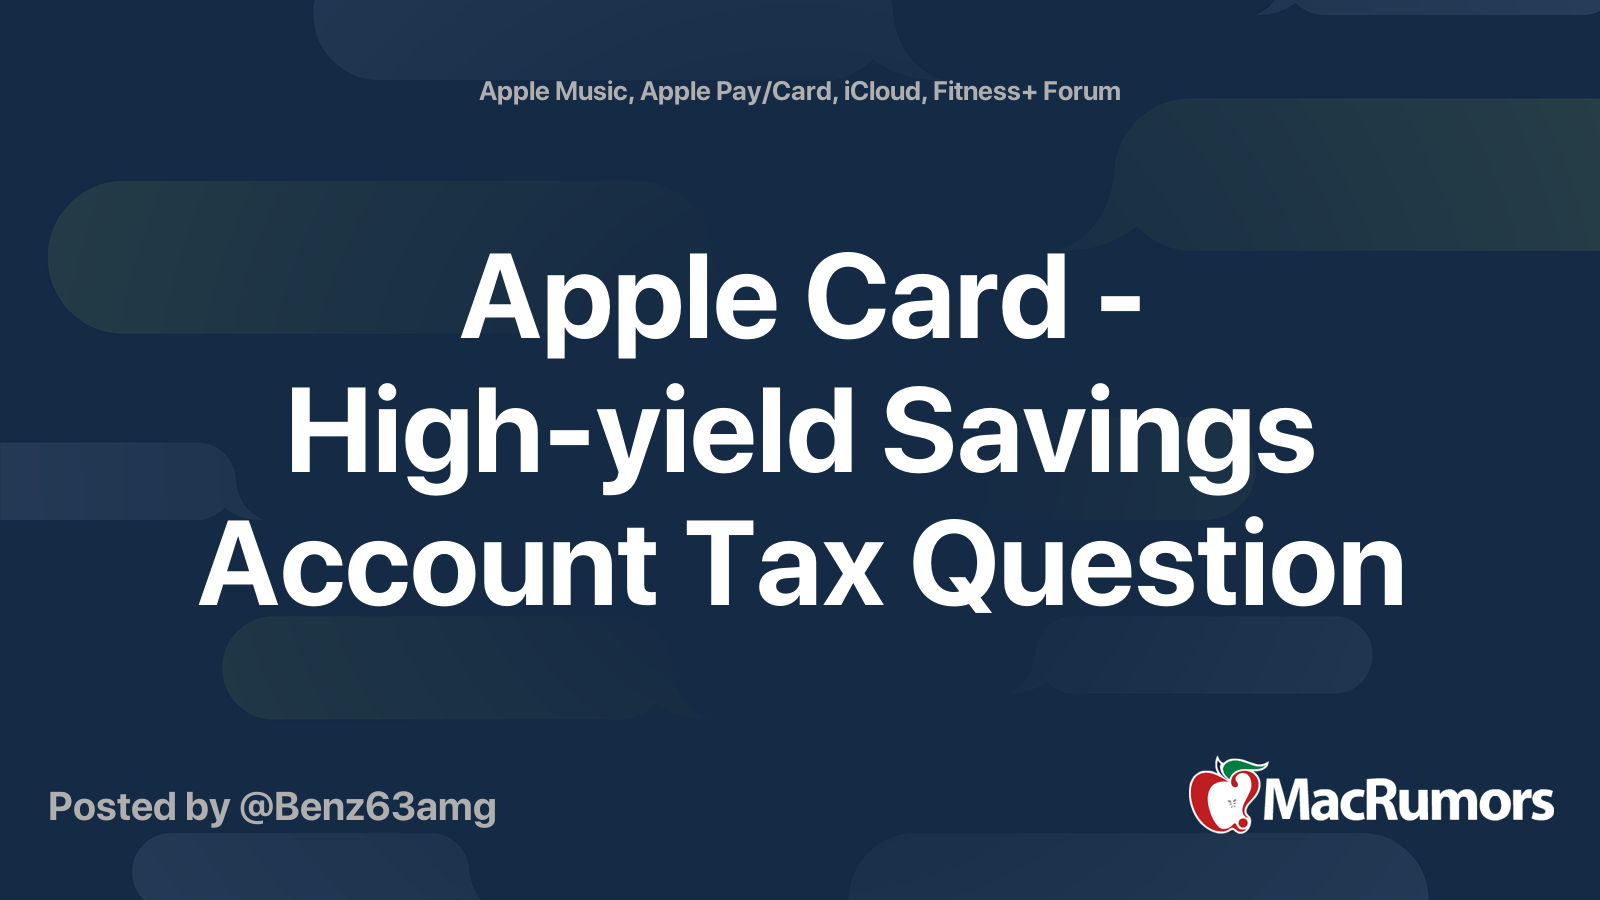 Apple Card - High-yield Savings Account Tax Question